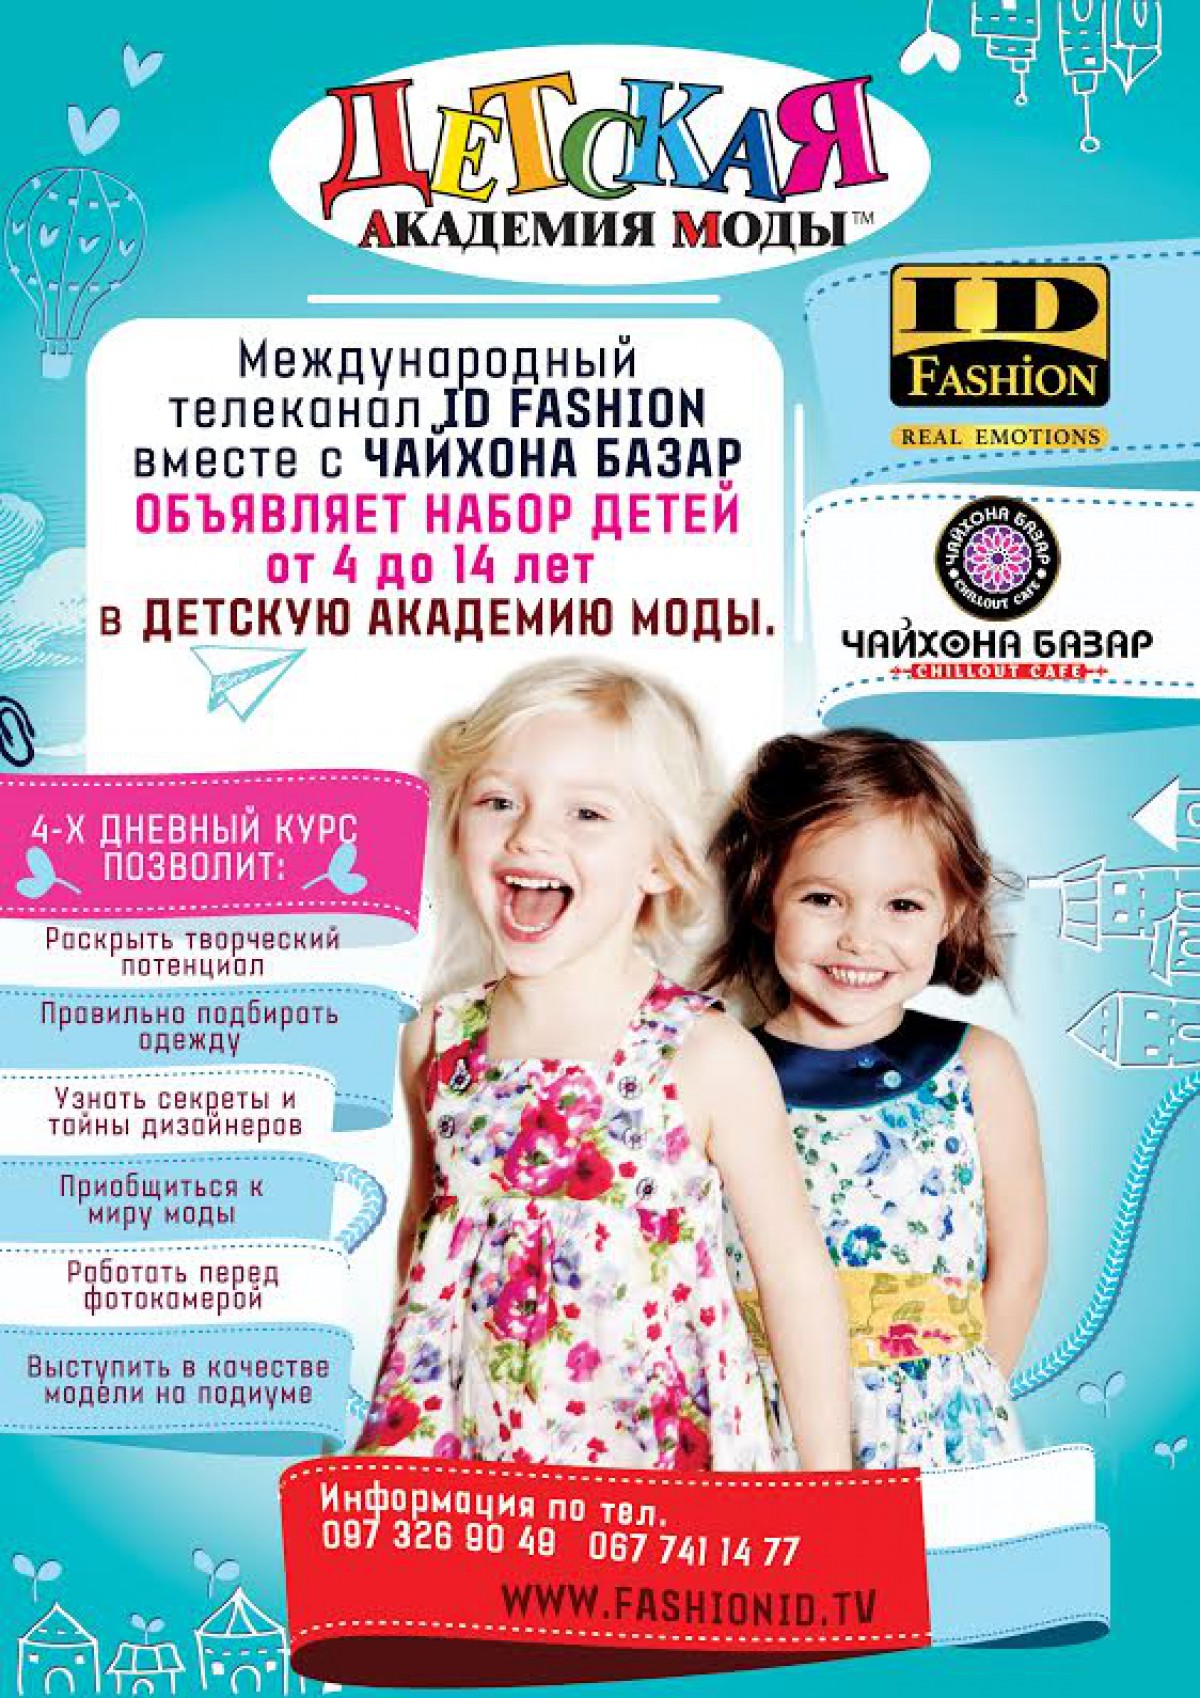 Детская академия моды в Чайхона Базар